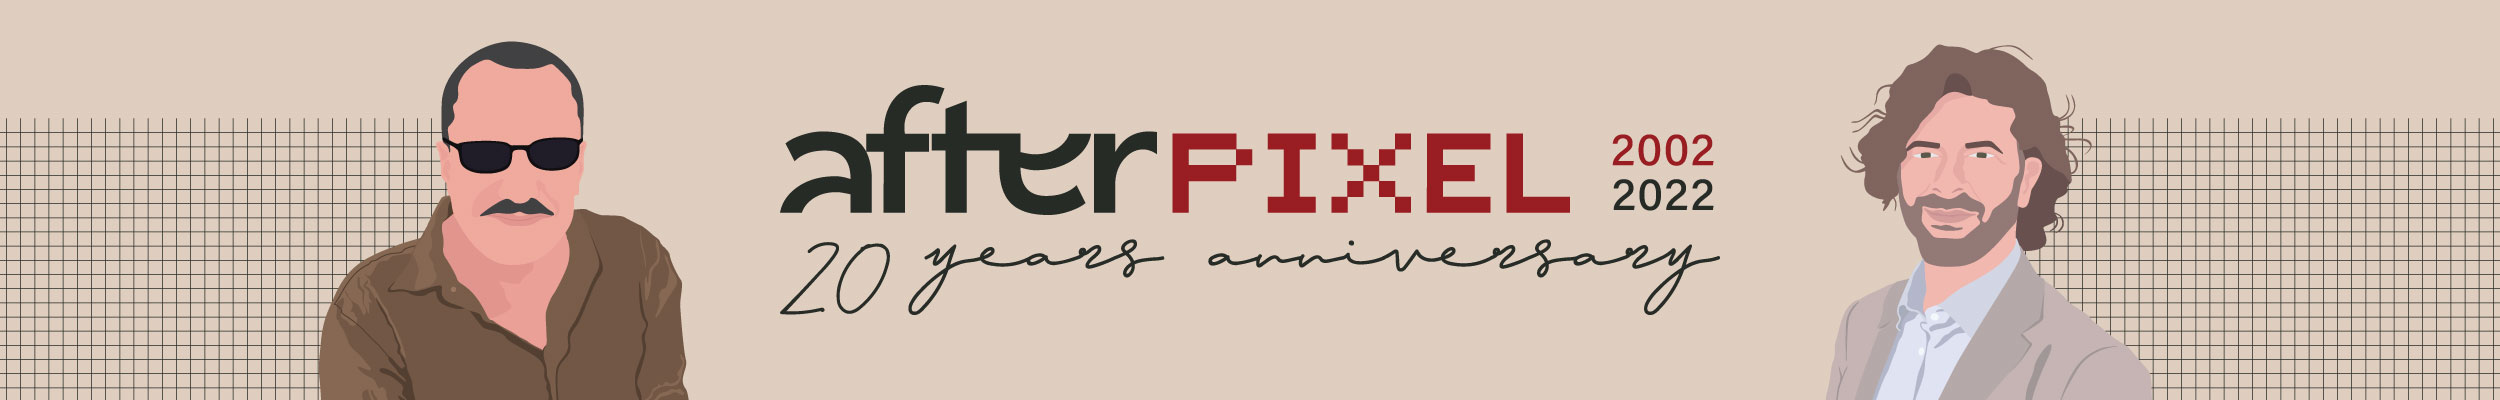 Logo AFTERPIXEL SRL